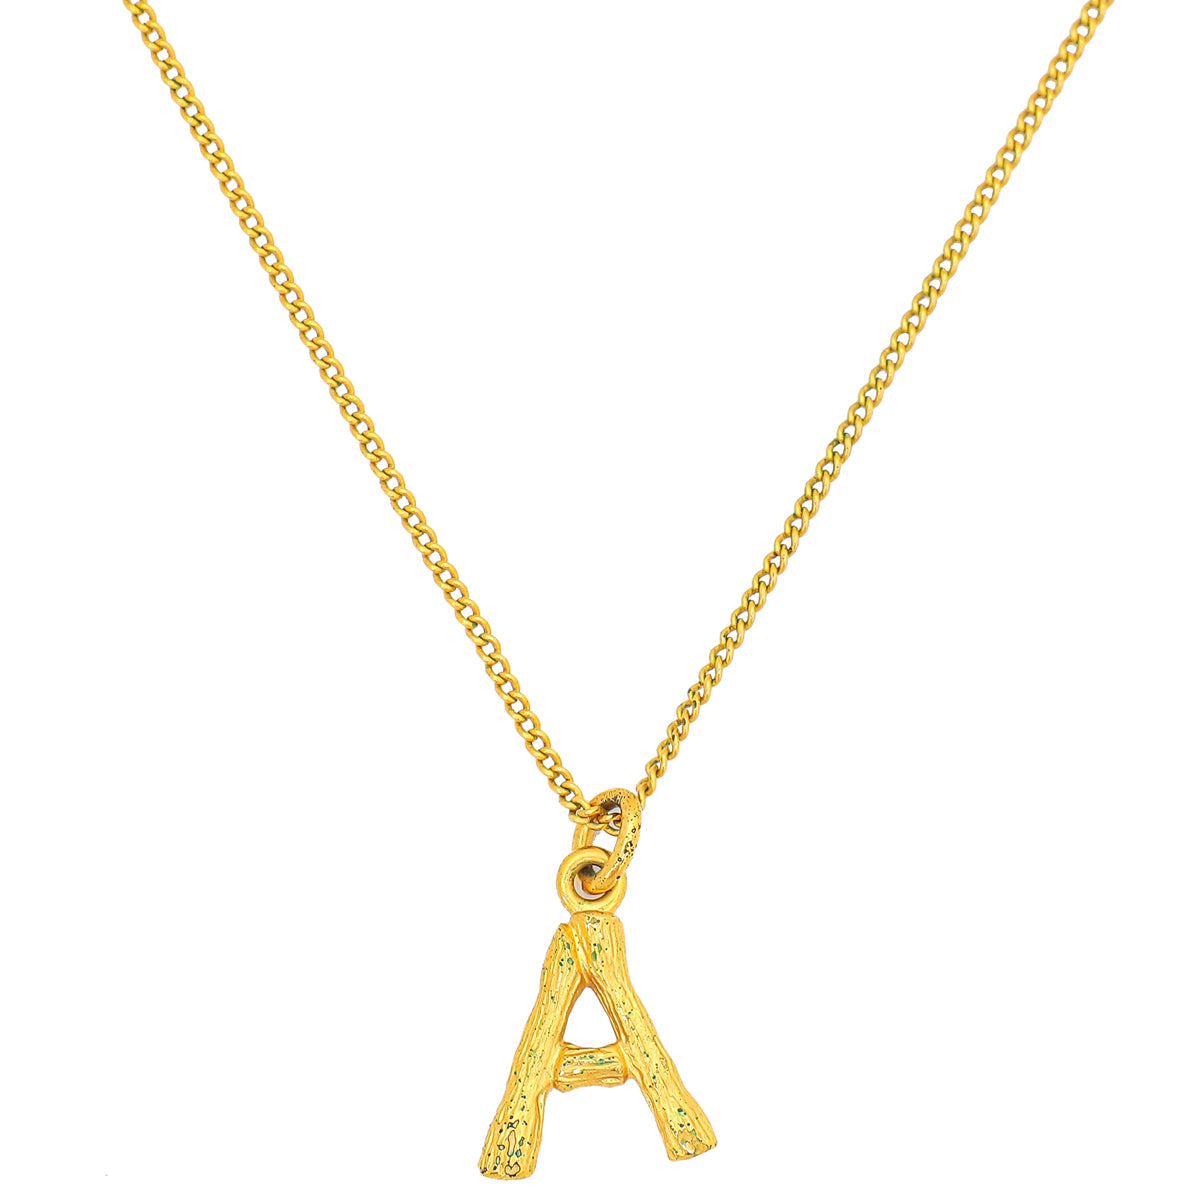 Celine Gold Finish Alphabet "A" Pendant Necklace